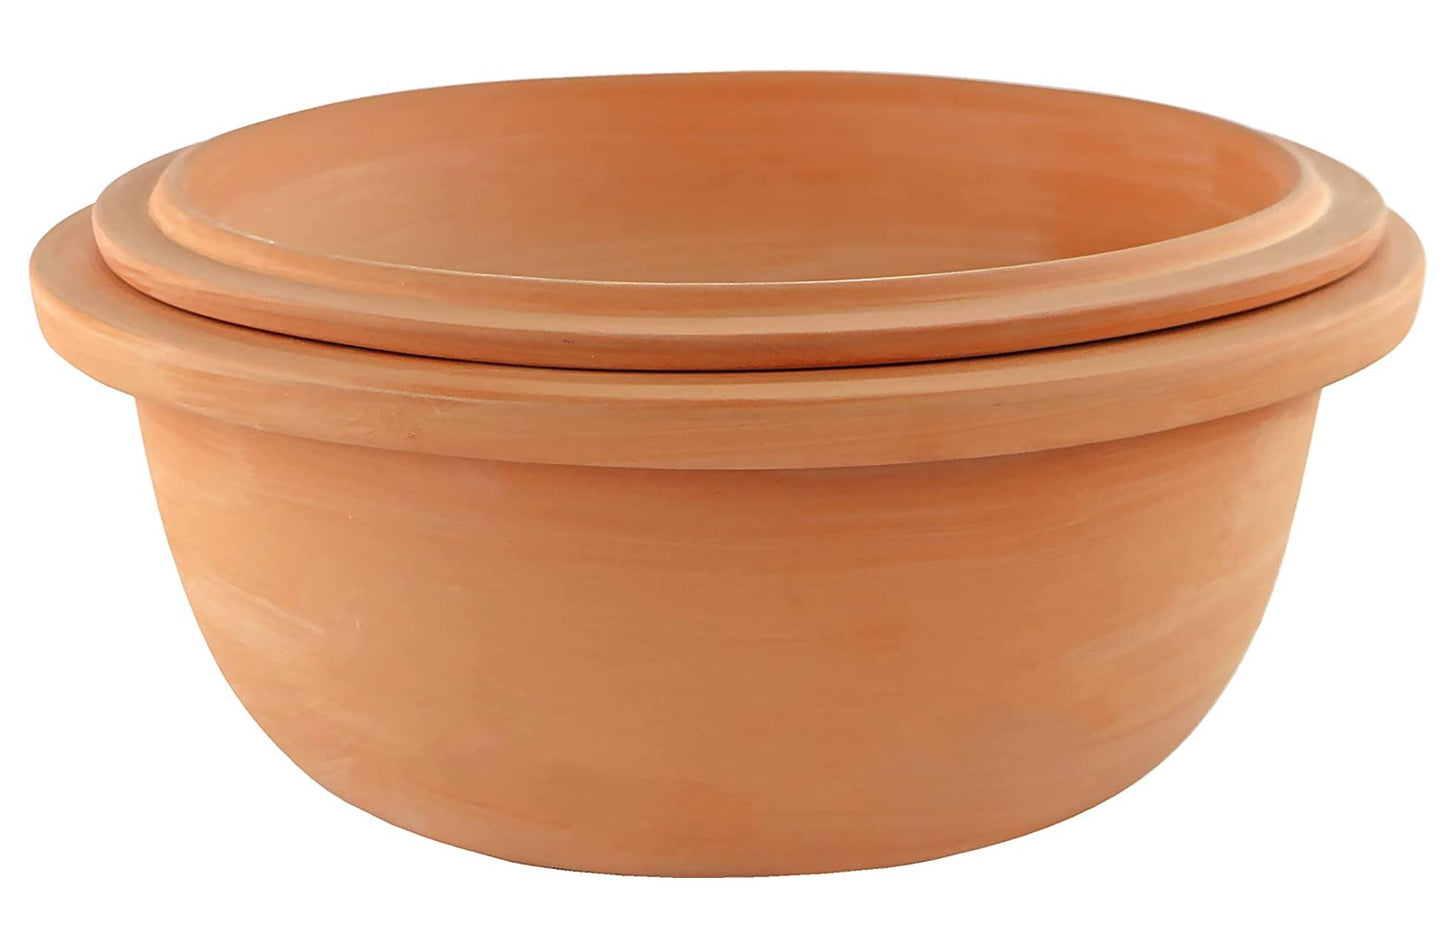 Eurita Round Clay Cooking Pot and Roaster - 2 Quart